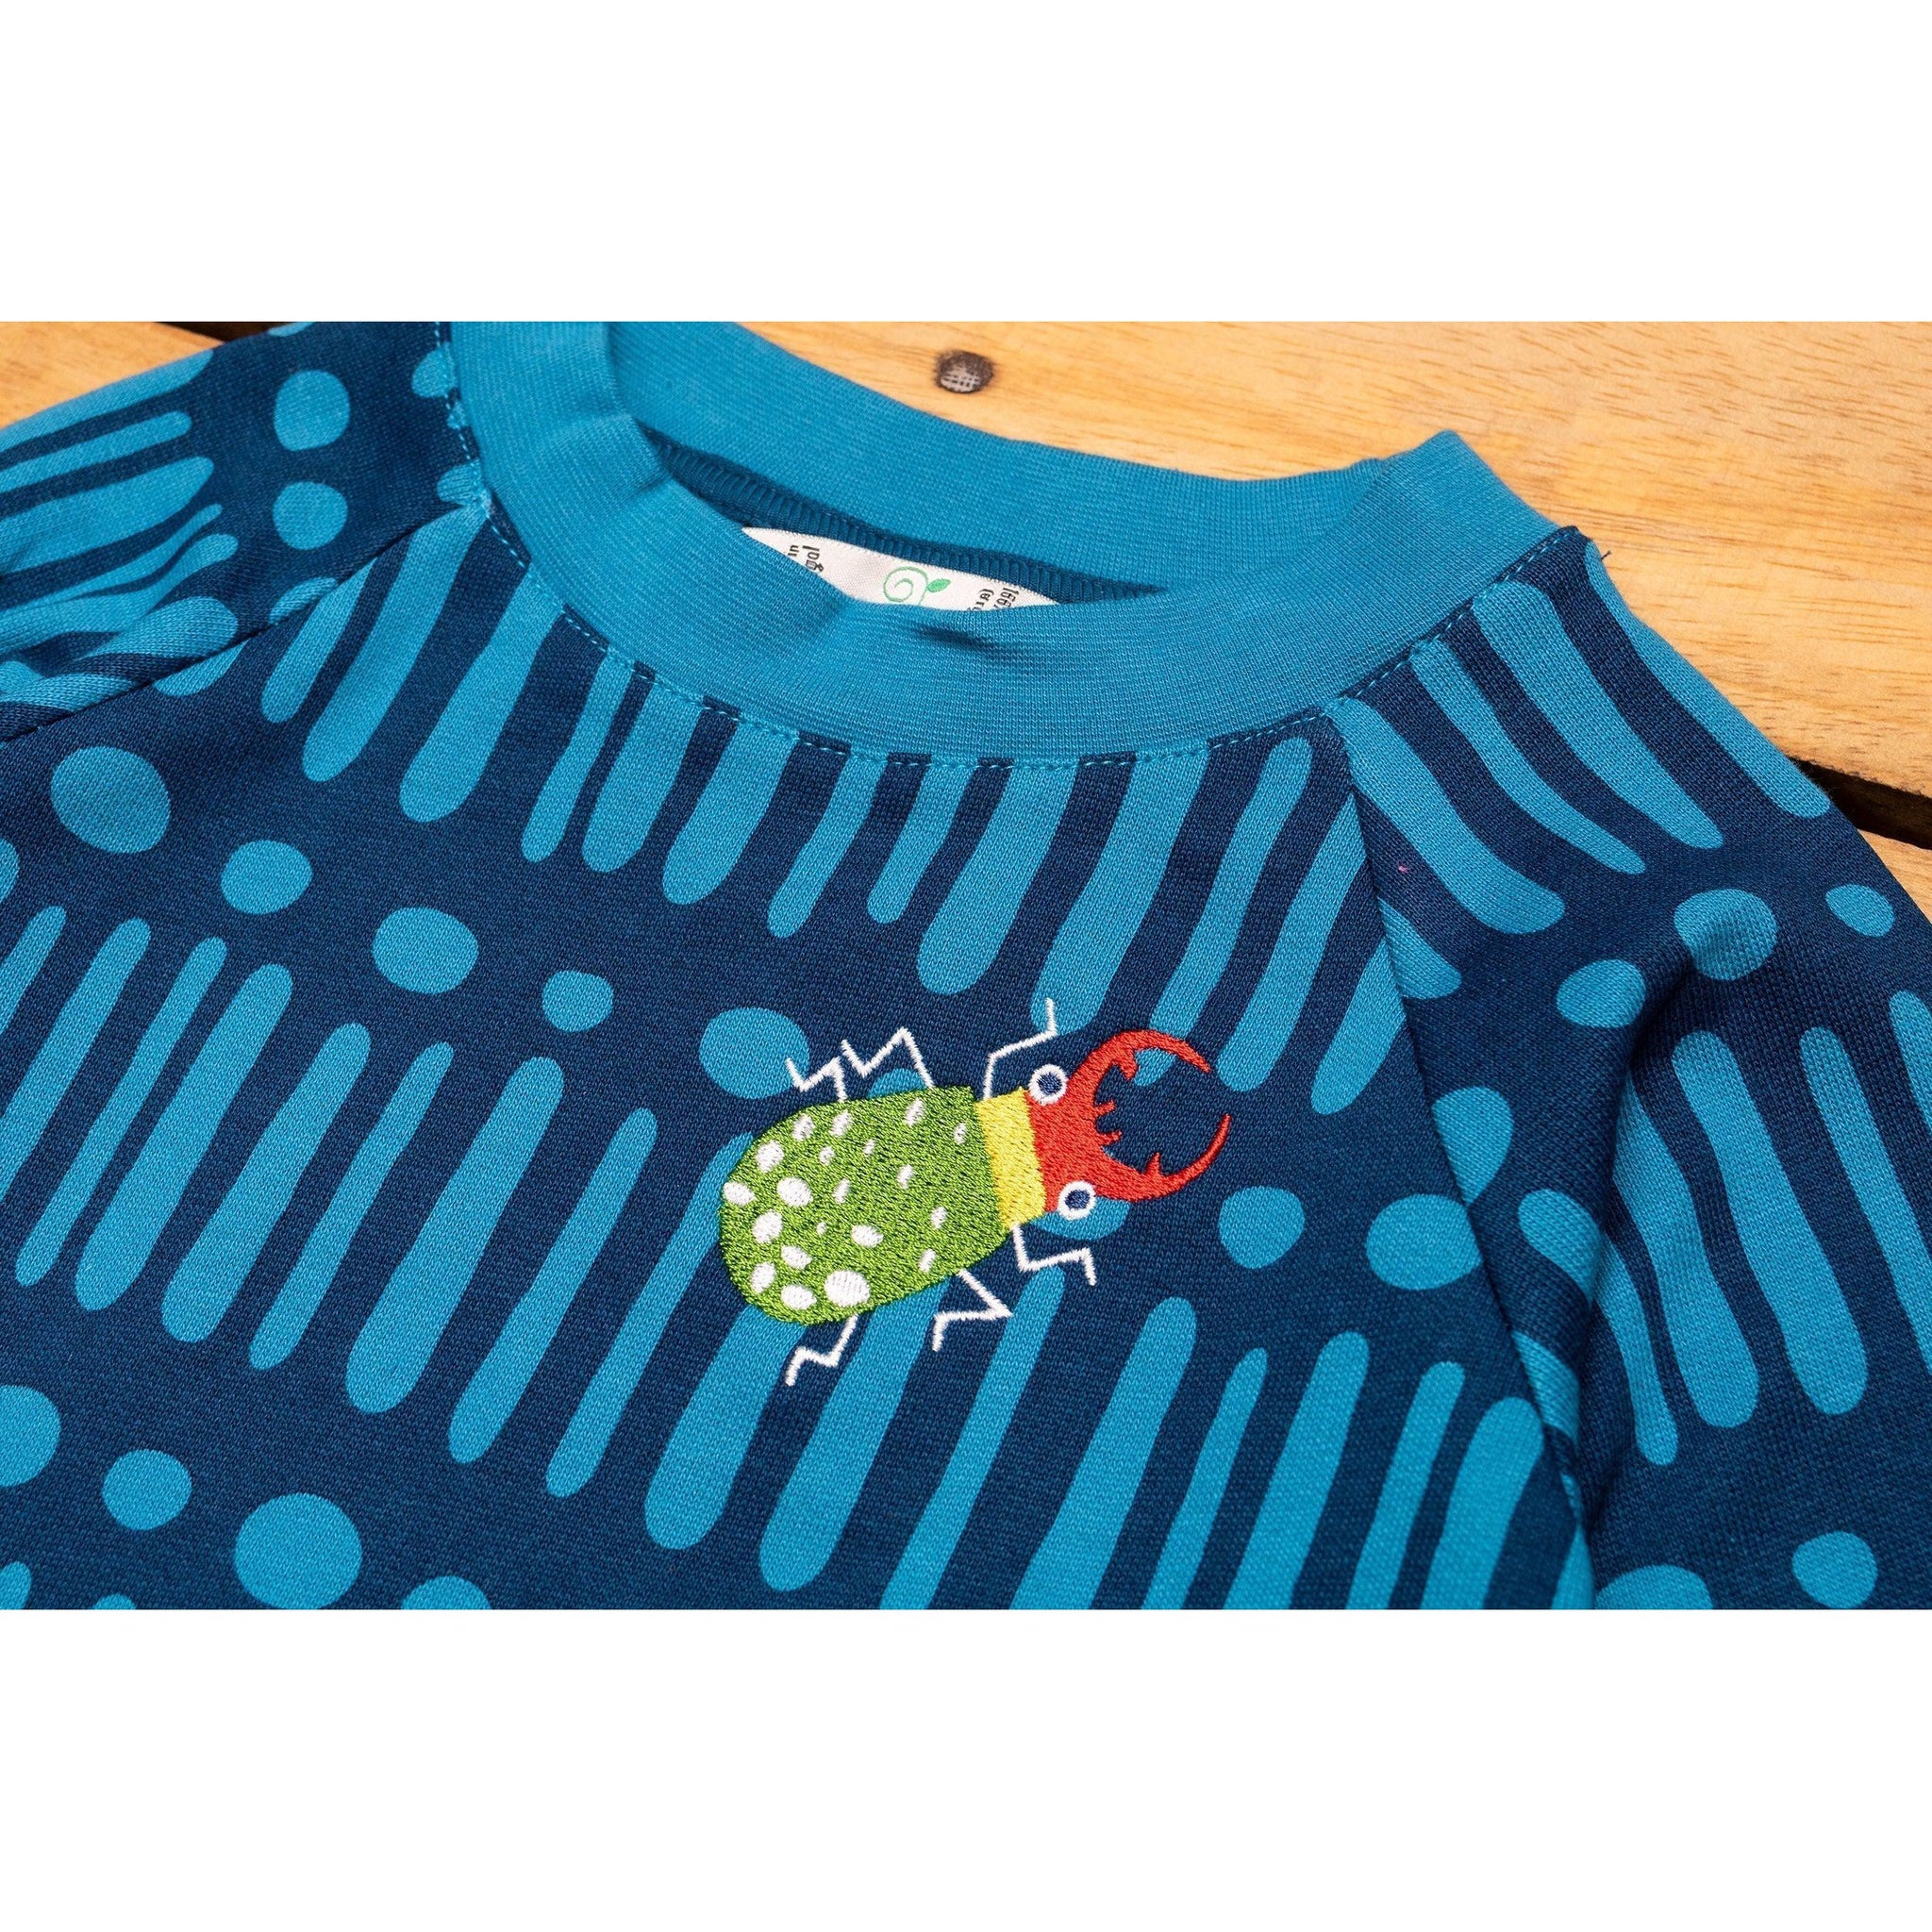 Merle - Stag Beetle Sweater Dress